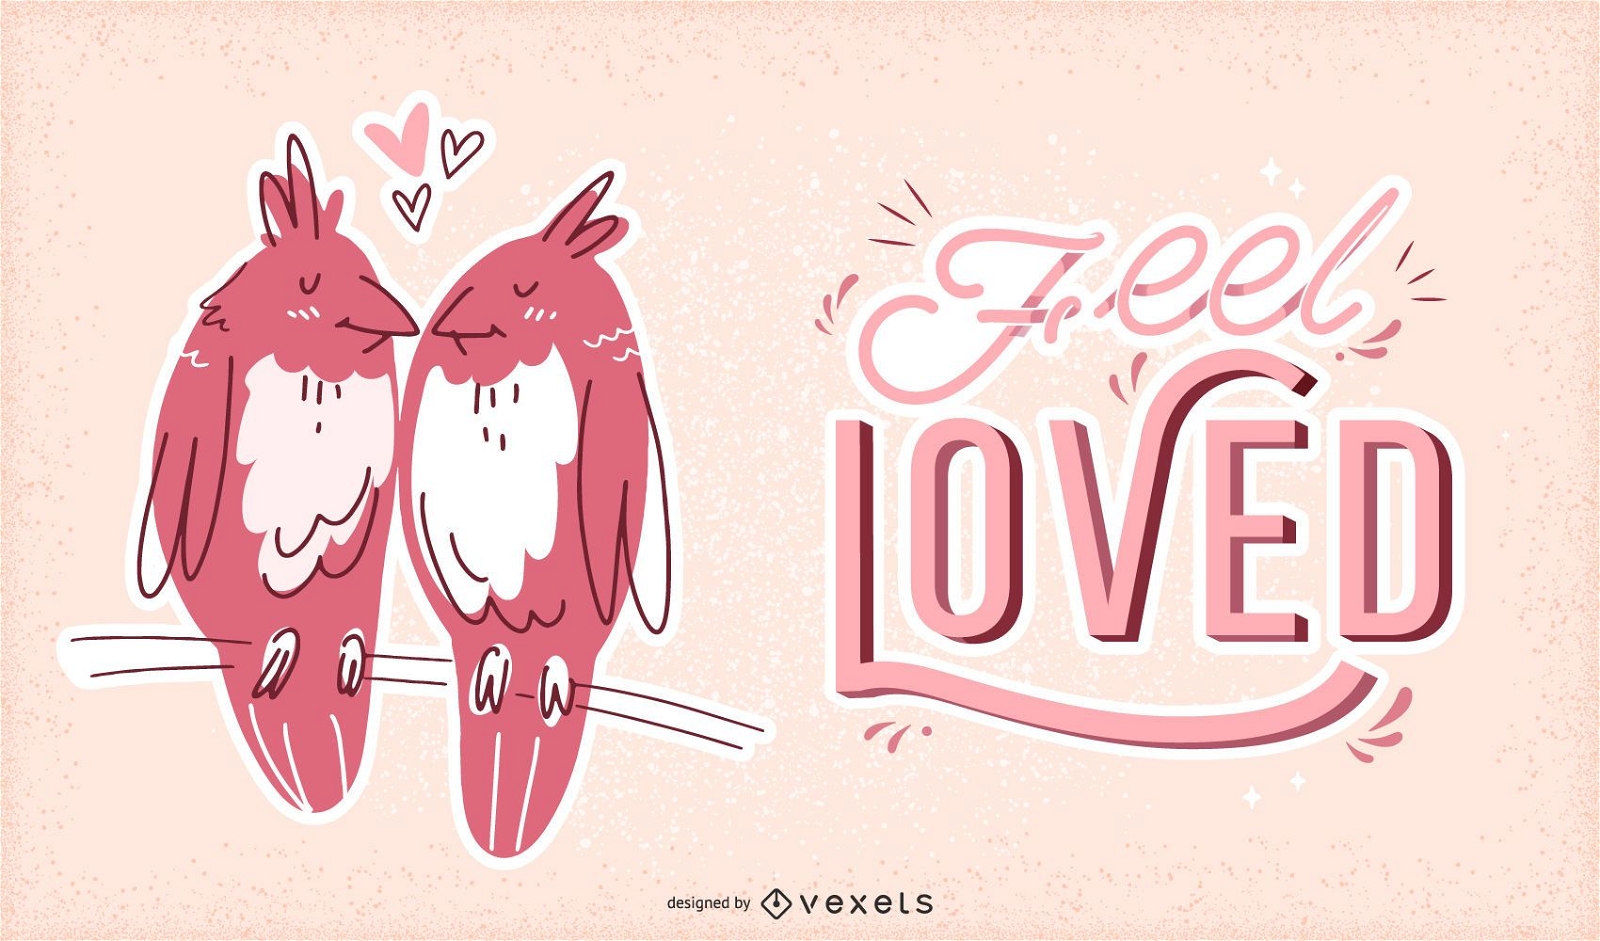 Feel loved valentine illustration